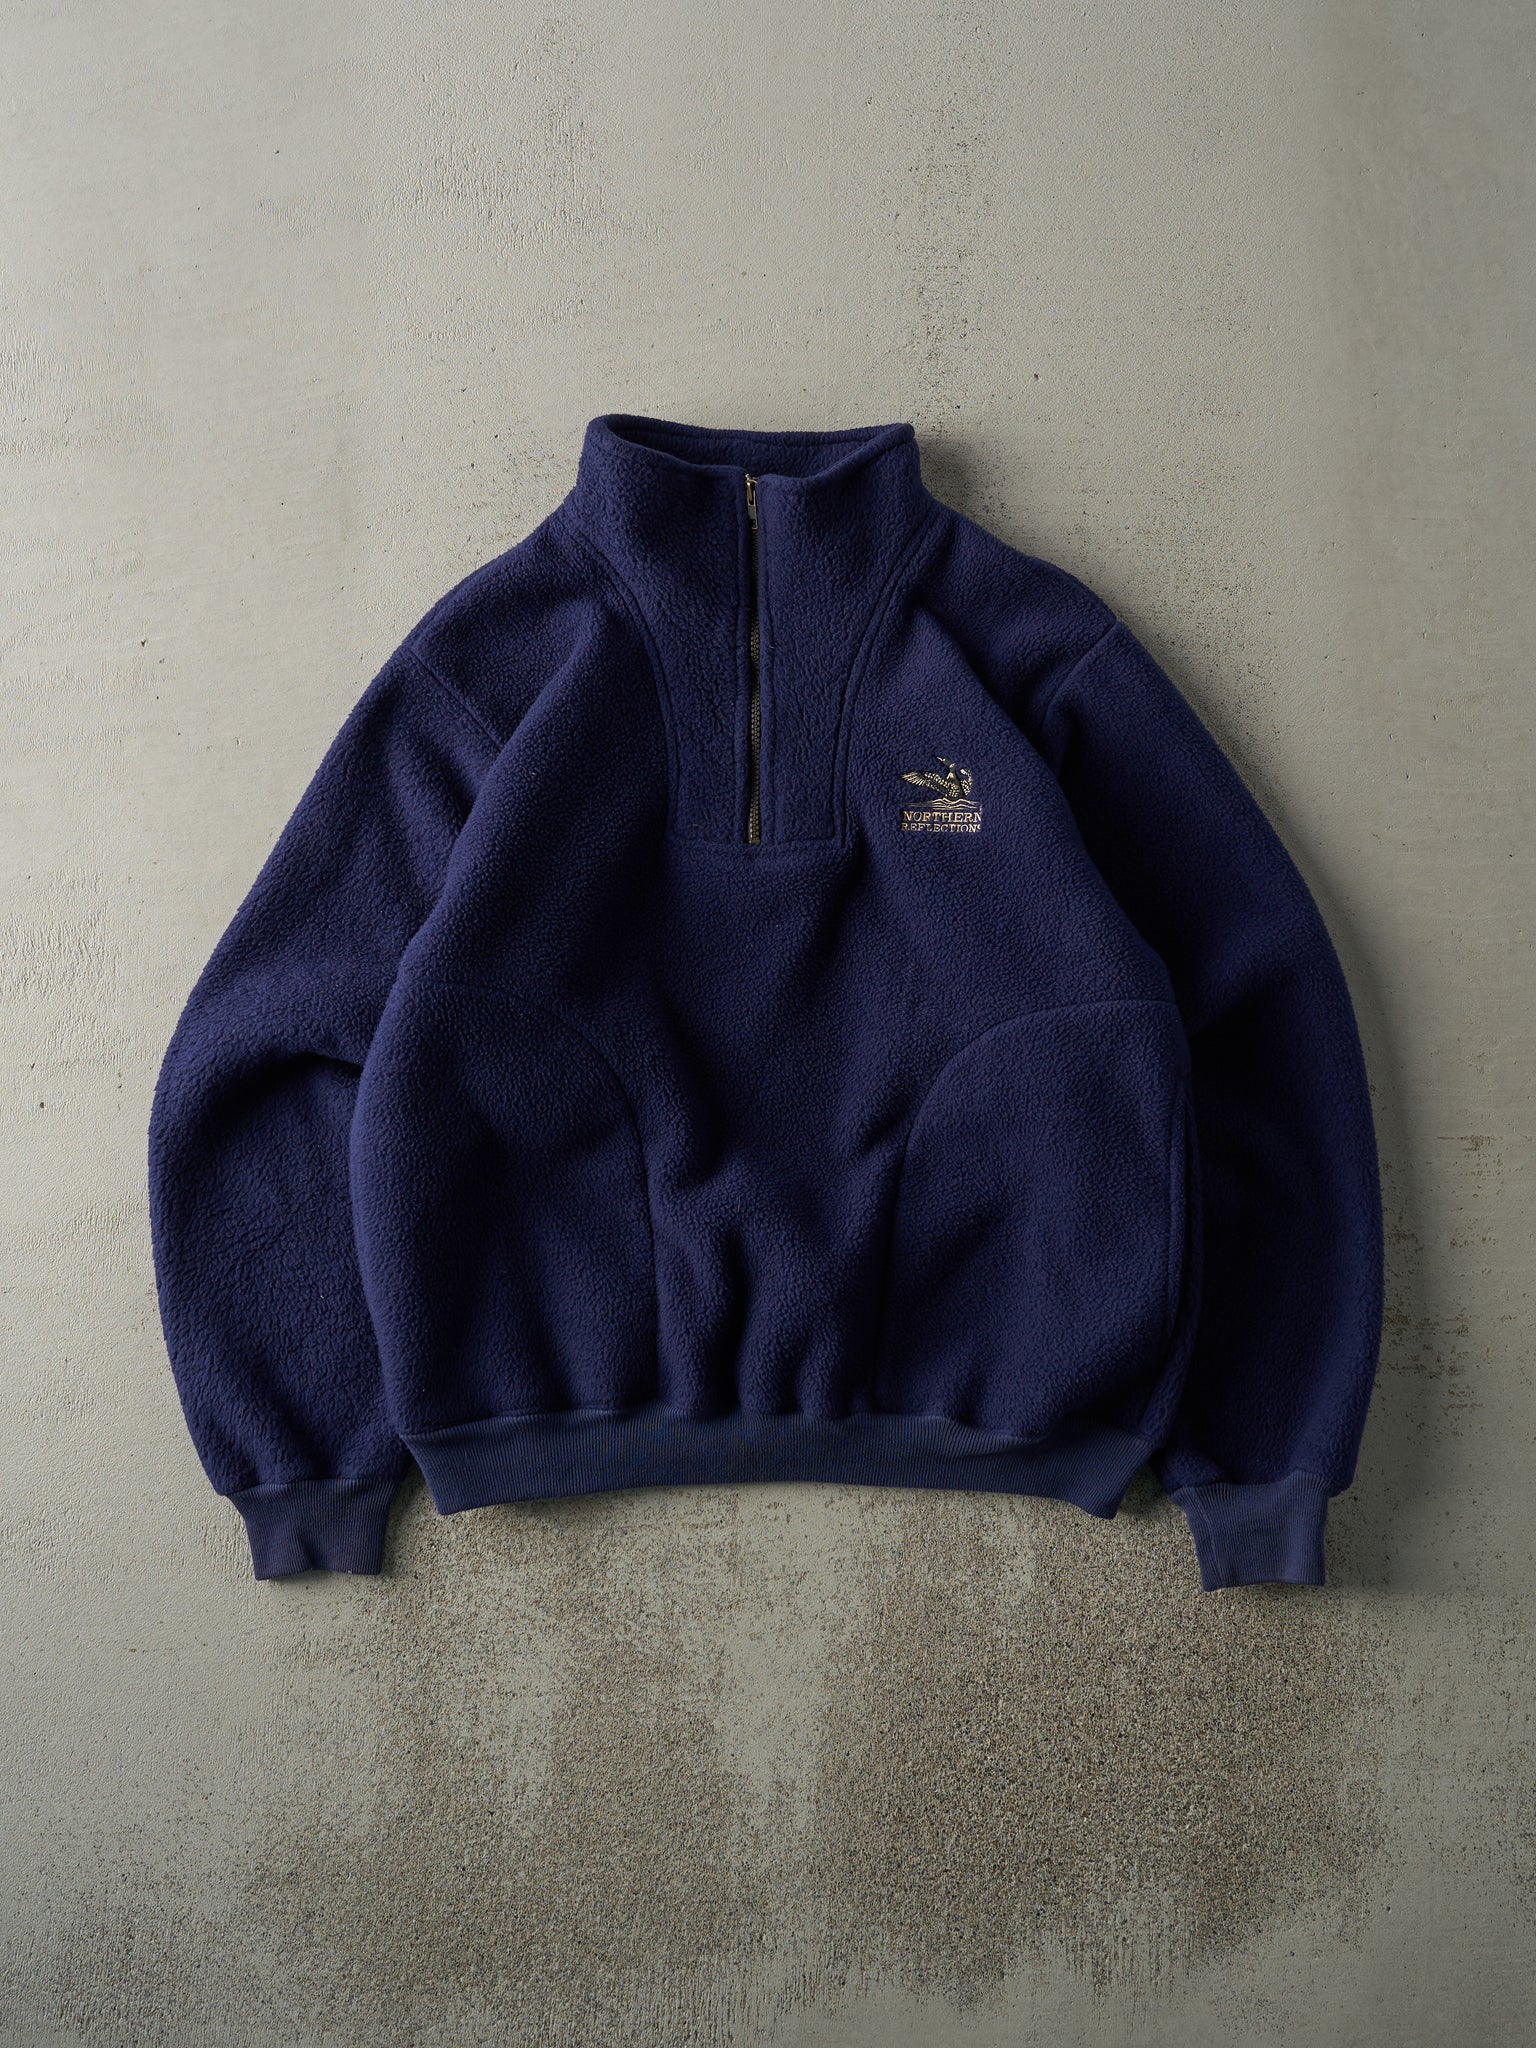 Vintage 90s Navy Blue Embroidered Quarter Zip Fleece Sweater (M/L)